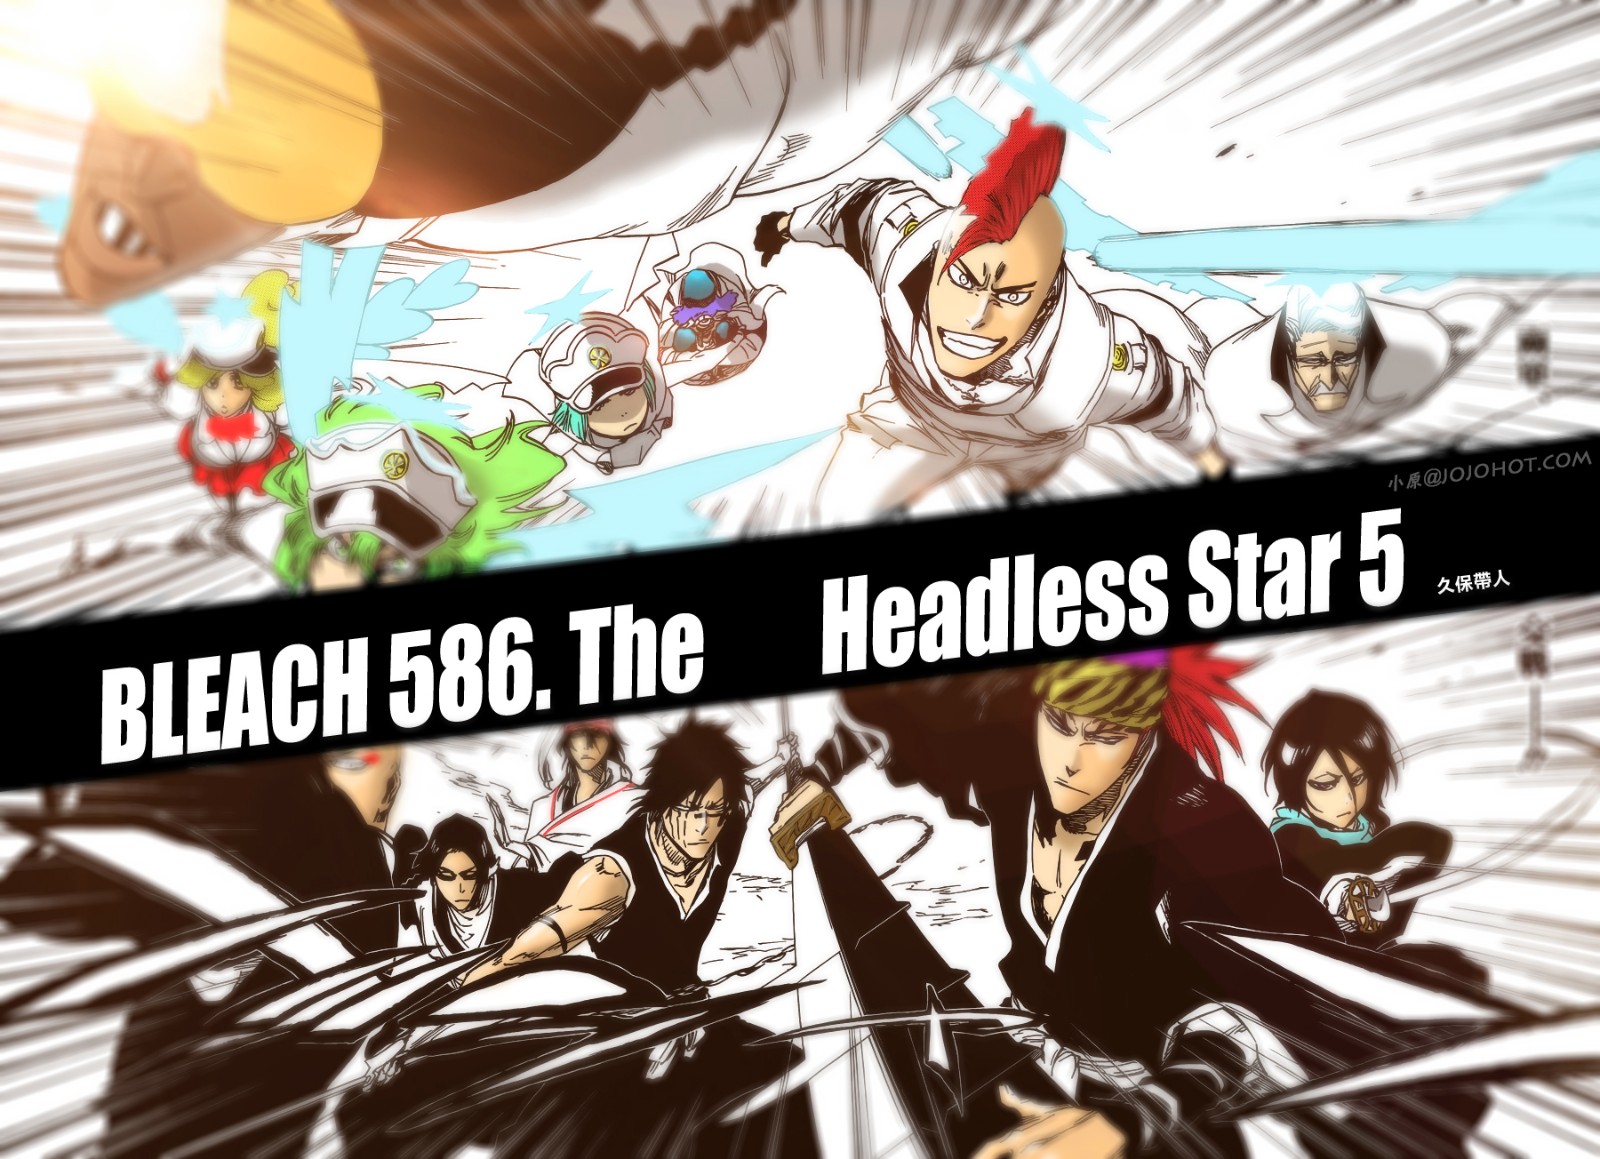 588 The Headless Star 7